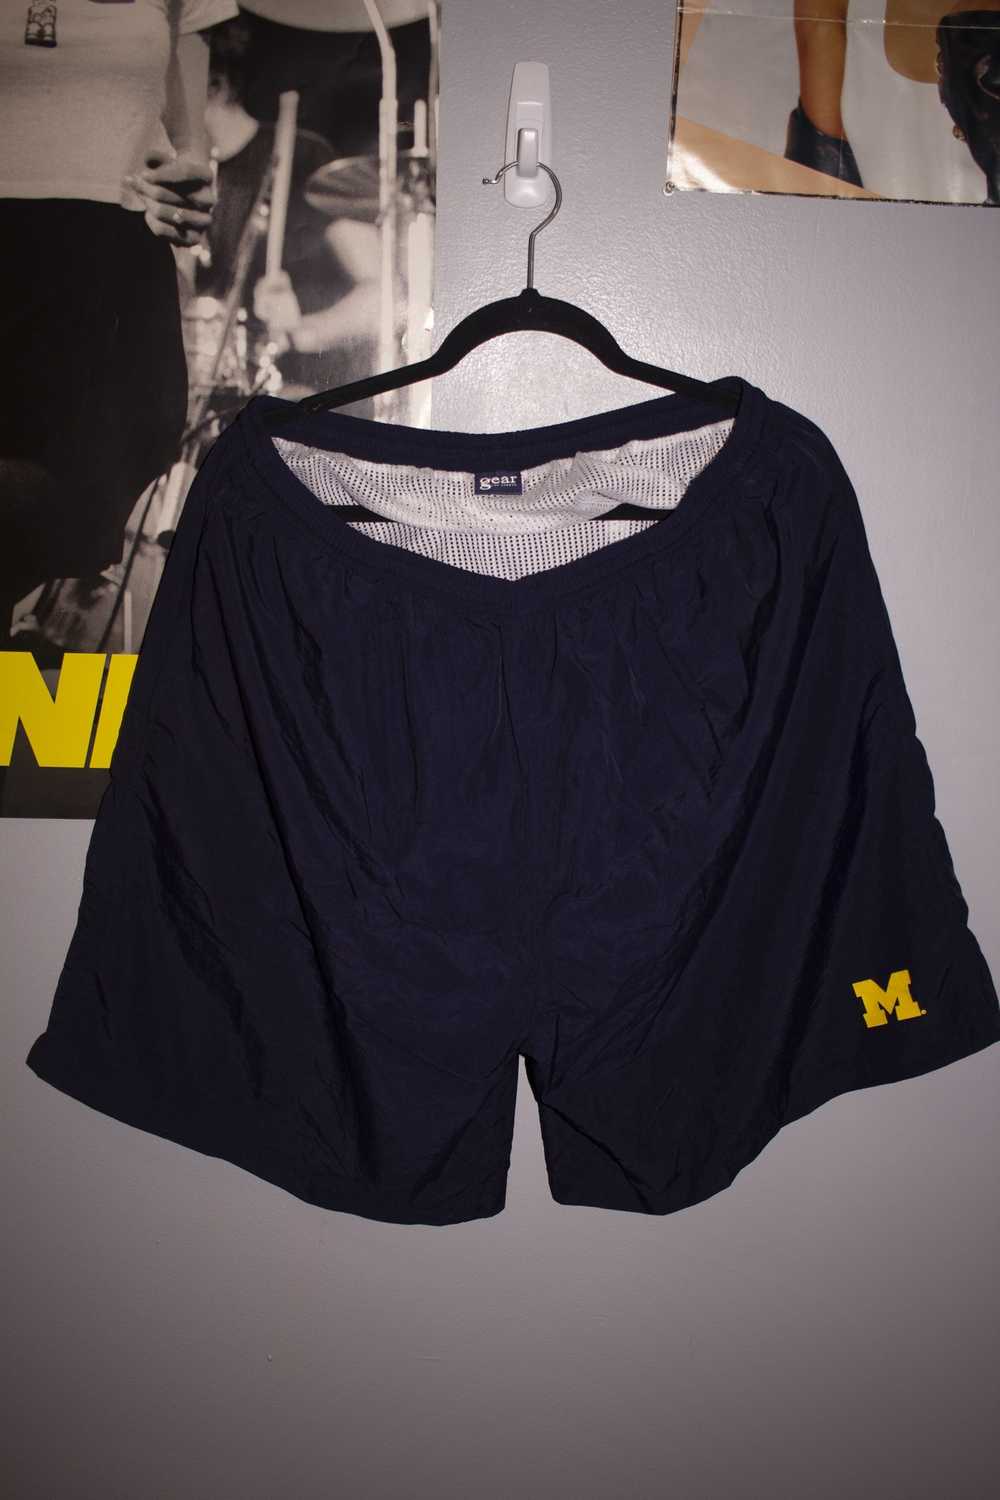 Ncaa × Vintage 90s Michigan Wolverine Shorts - image 5